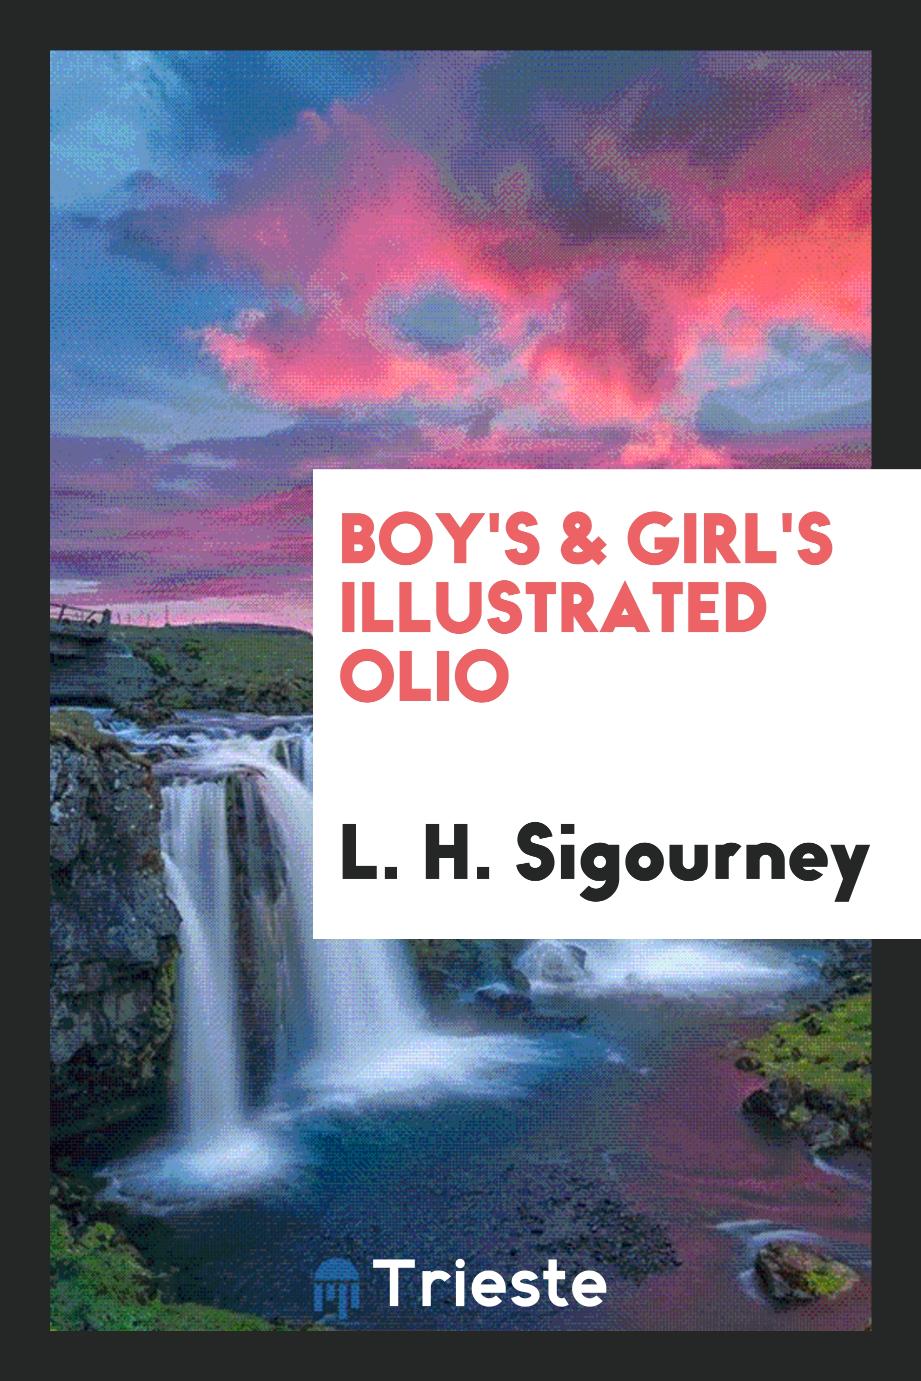 Boy's & Girl's Illustrated Olio